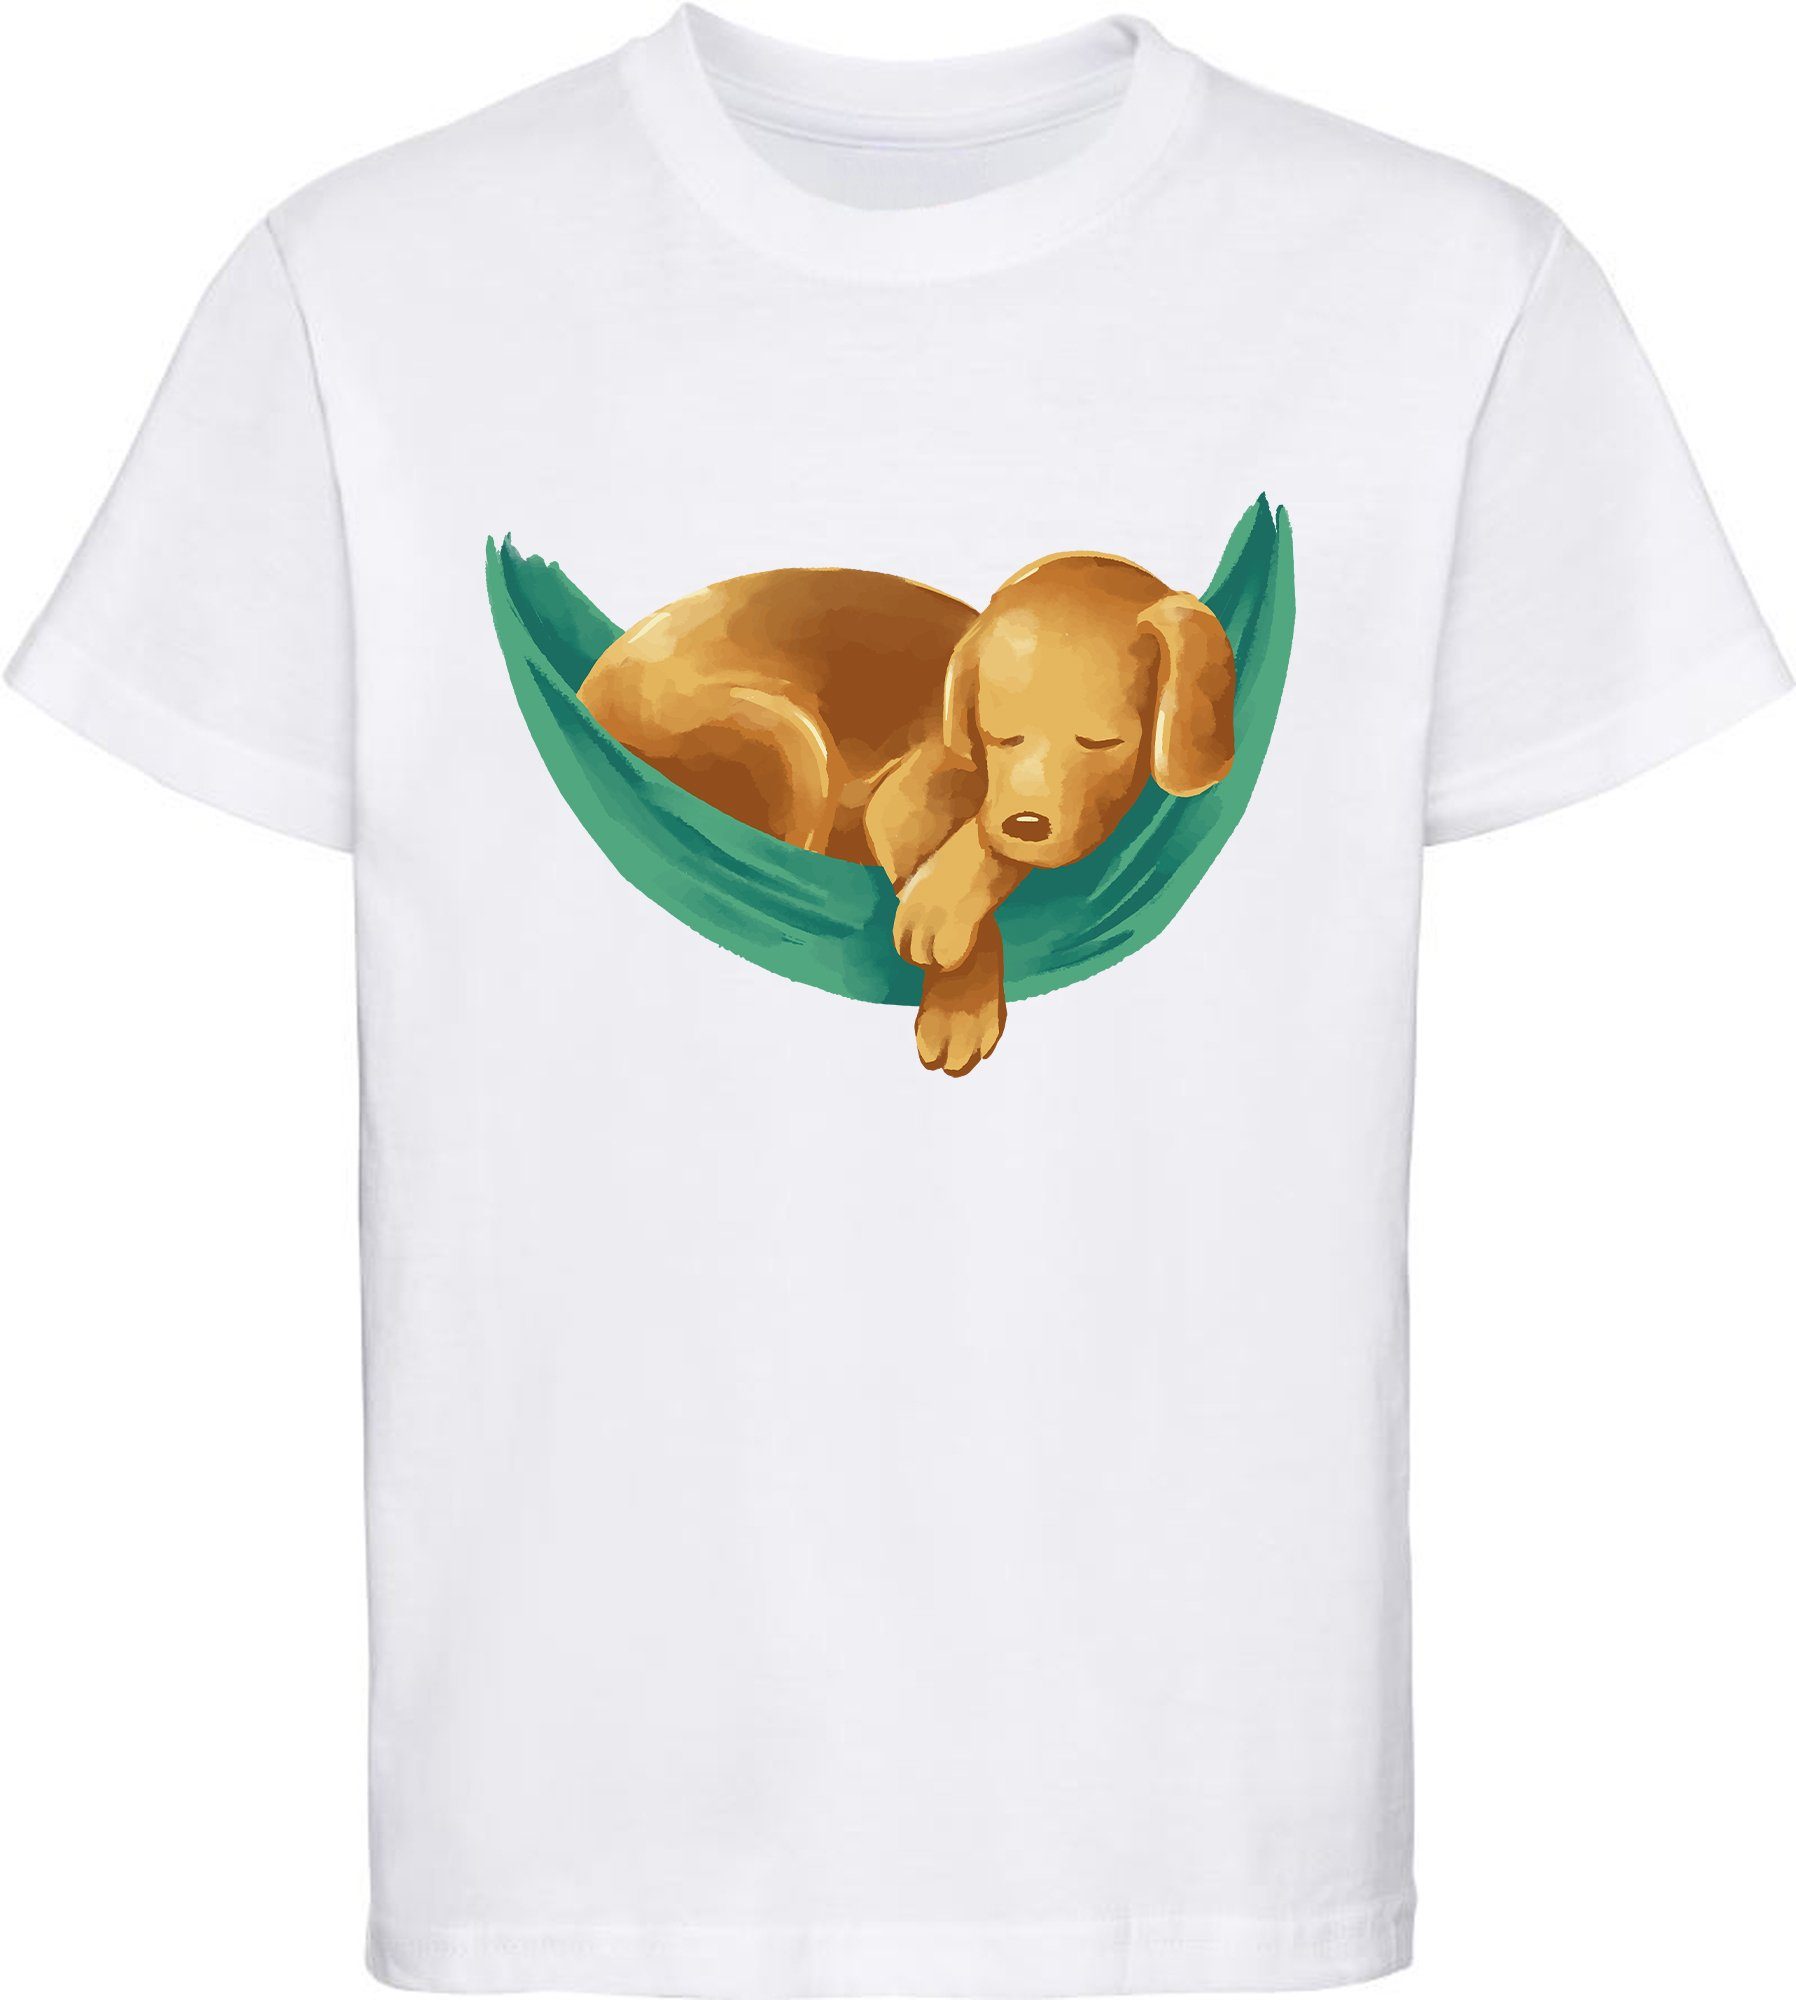 MyDesign24 T-Shirt Kinder in Hunde bedruckt Shirt Baumwollshirt Aufdruck, mit Print Welpe Labrador Hängematte weiss i245 